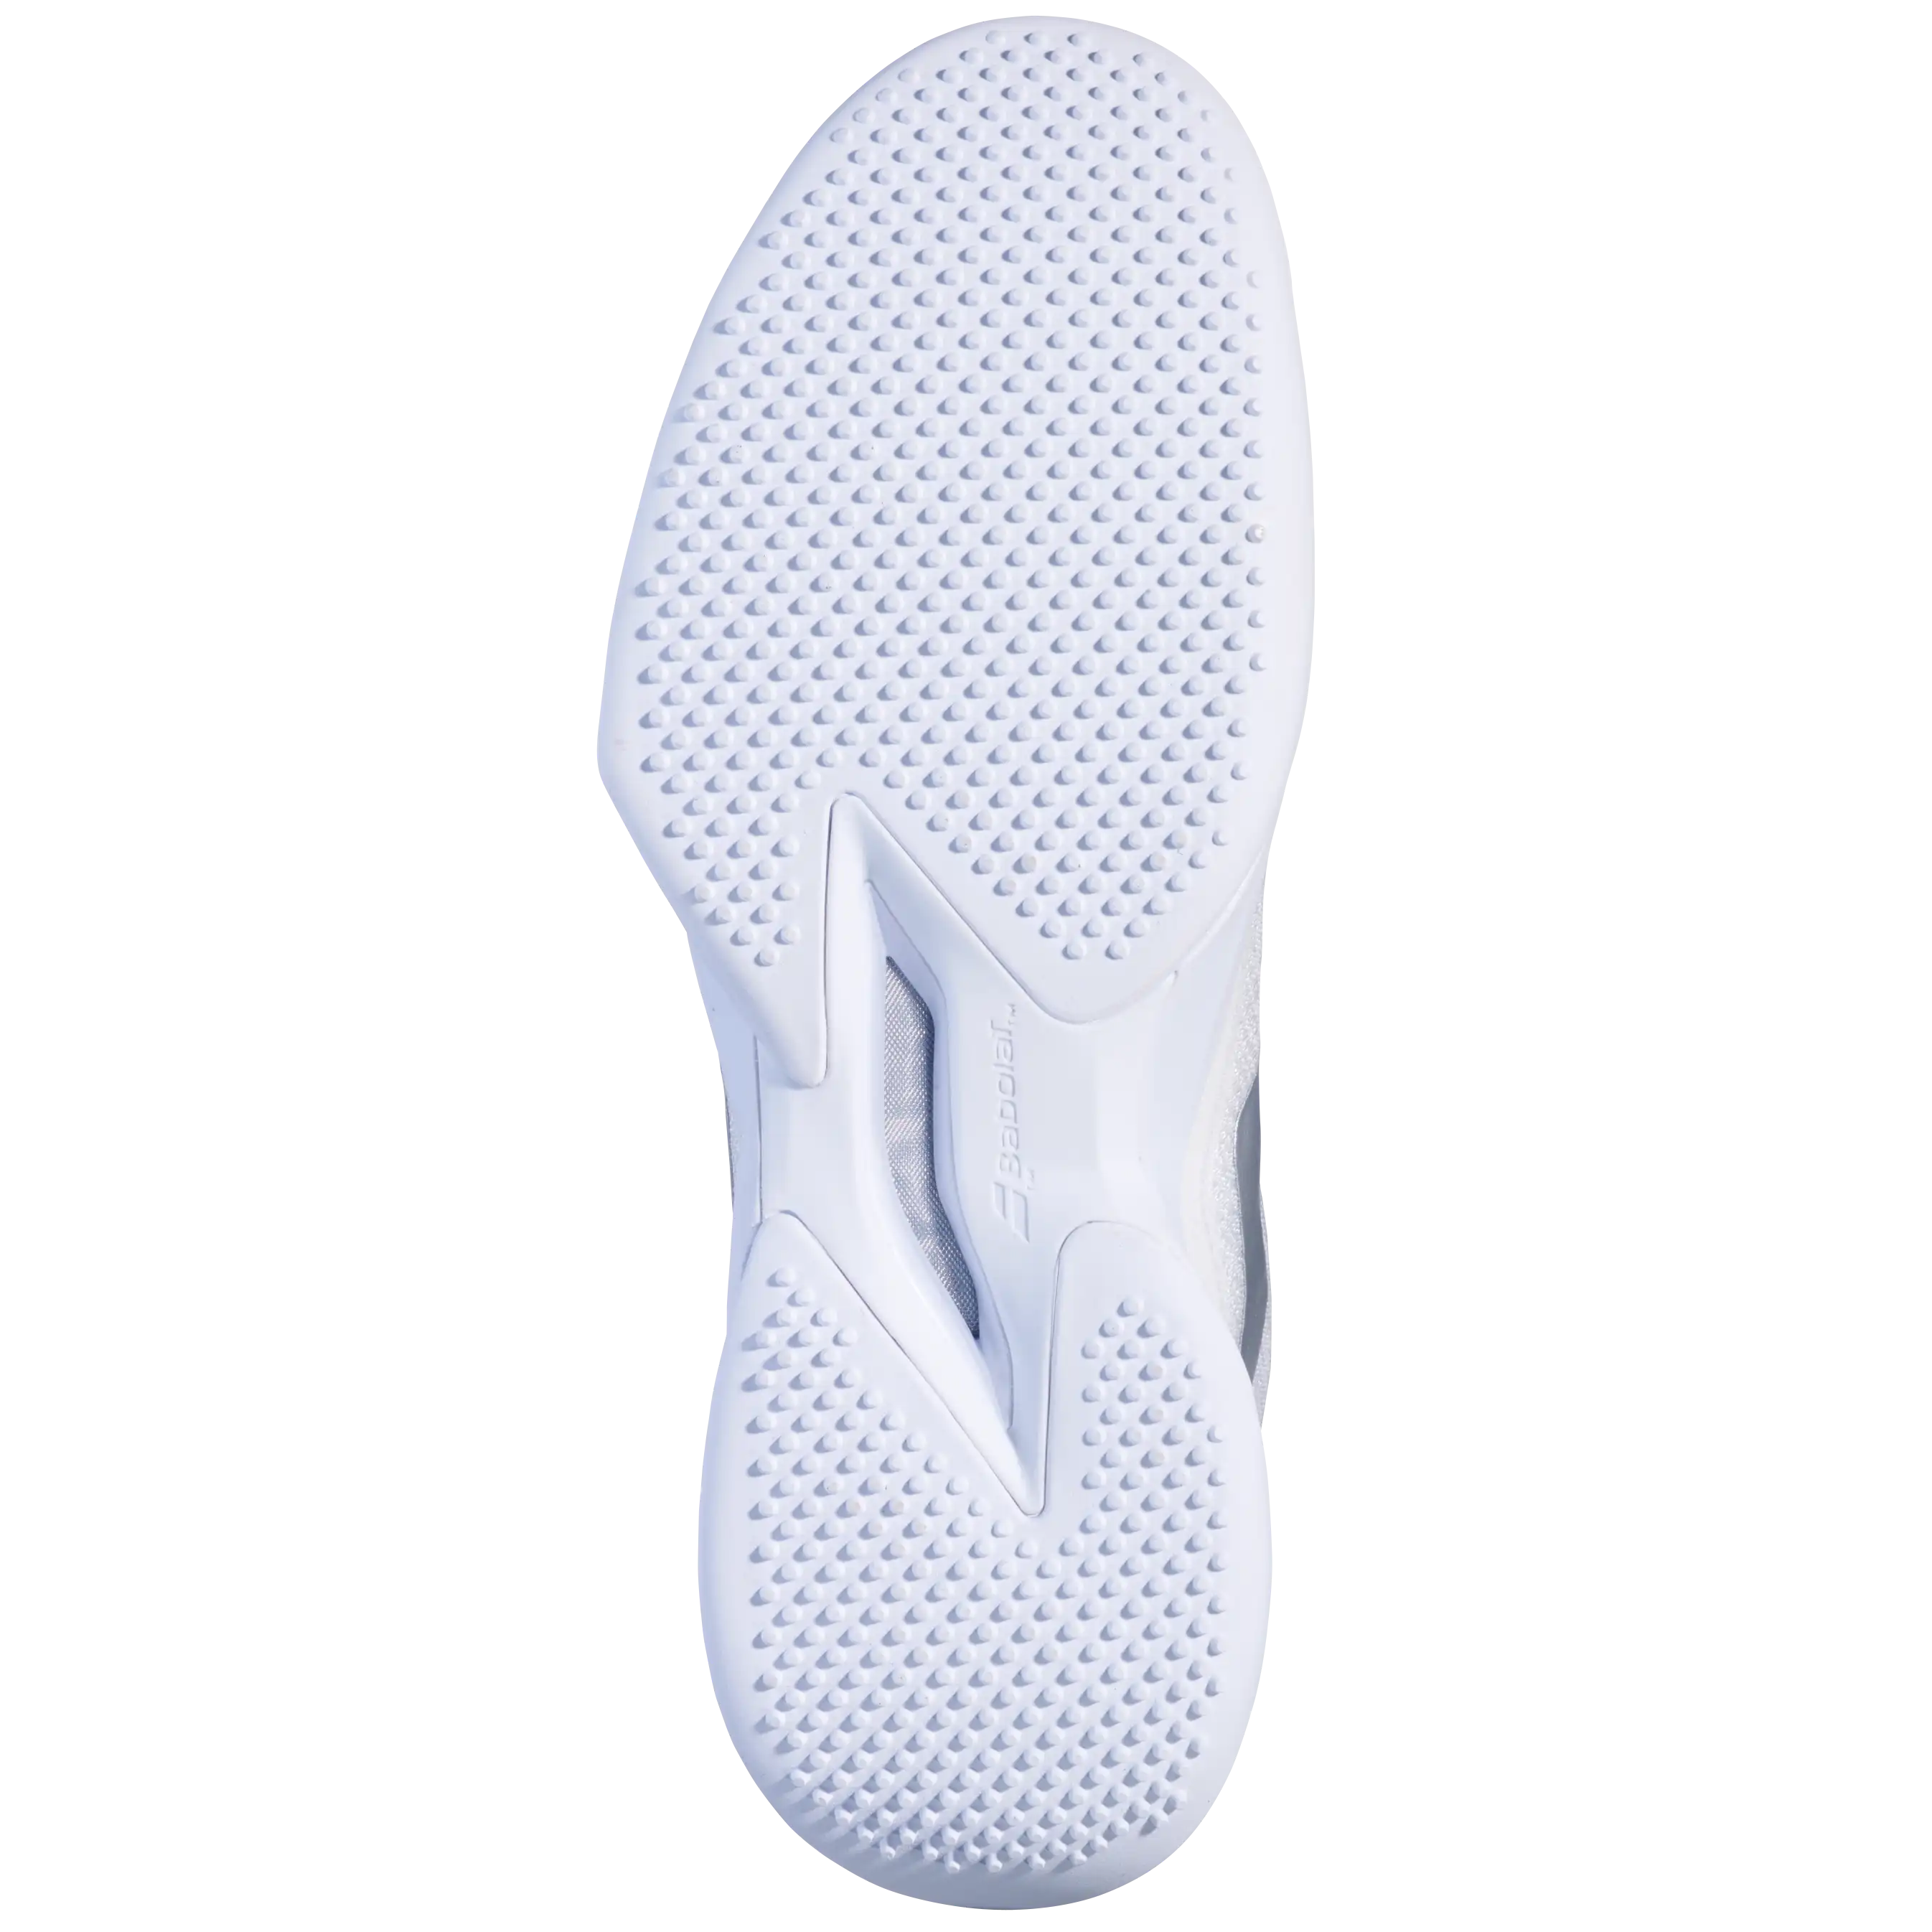 Babolat Men's Jet Mach 3 Grass Wimbledon Tennis Shoe In White/Silver